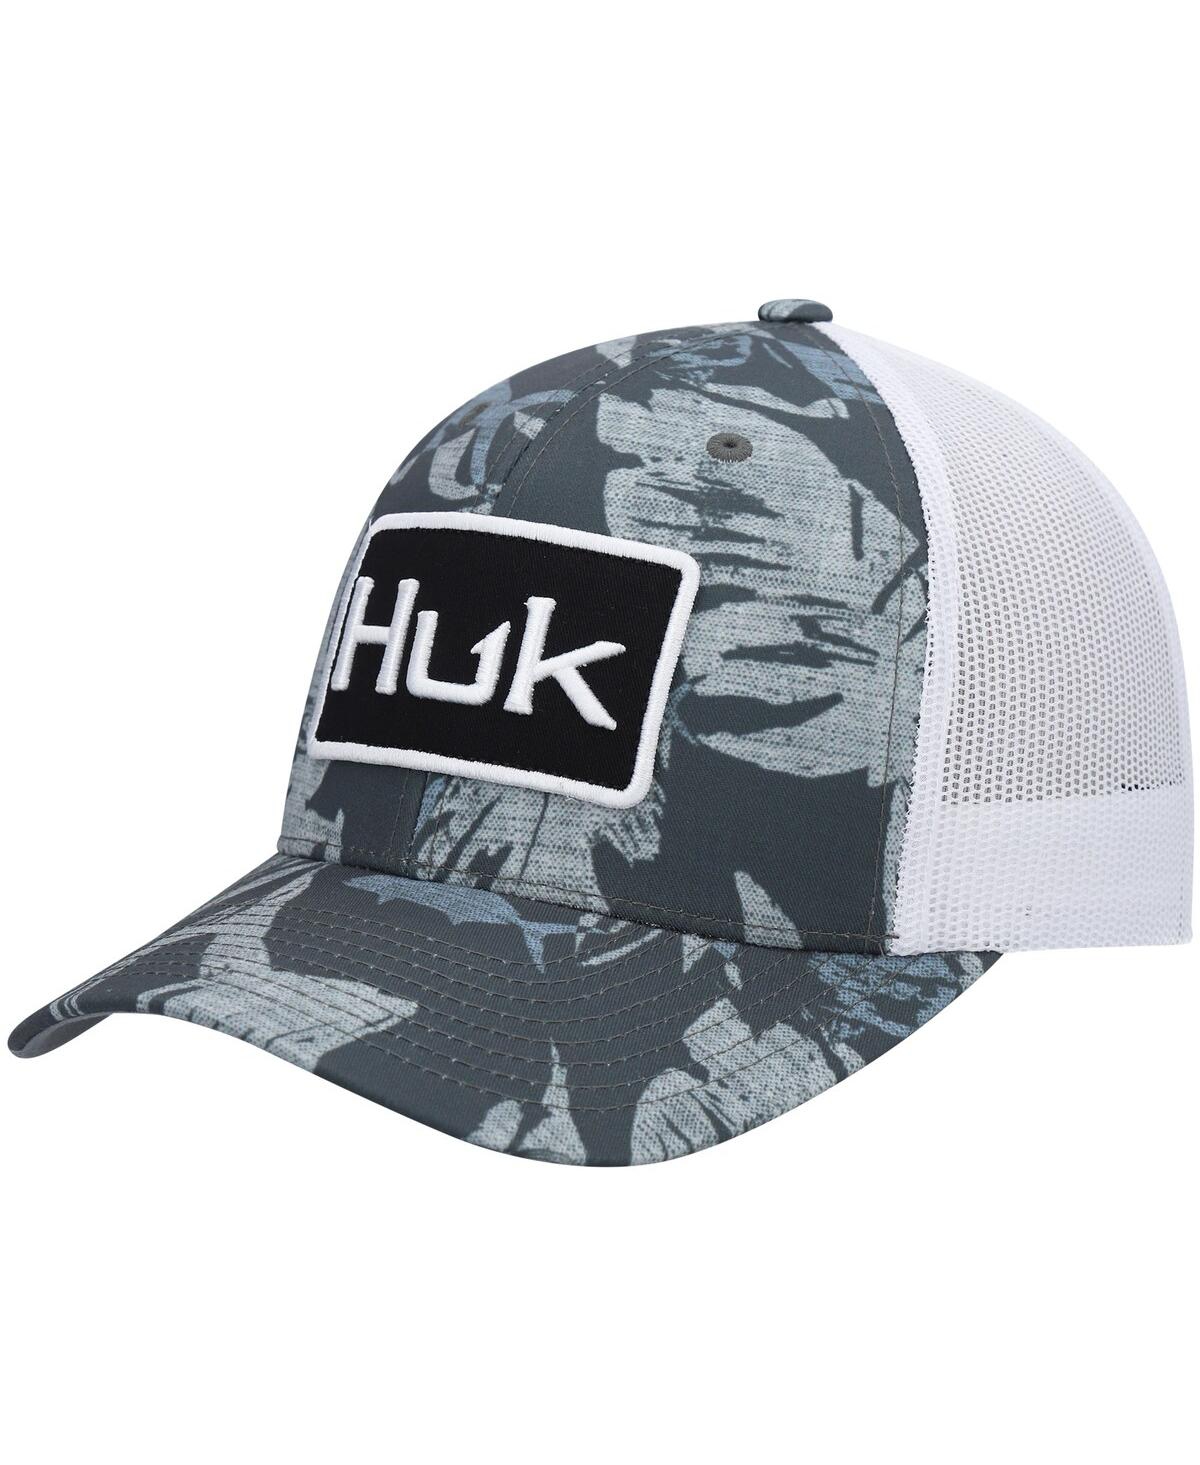 Men's Huk Graphite Ocean Palm Trucker Snapback Hat - Graphite